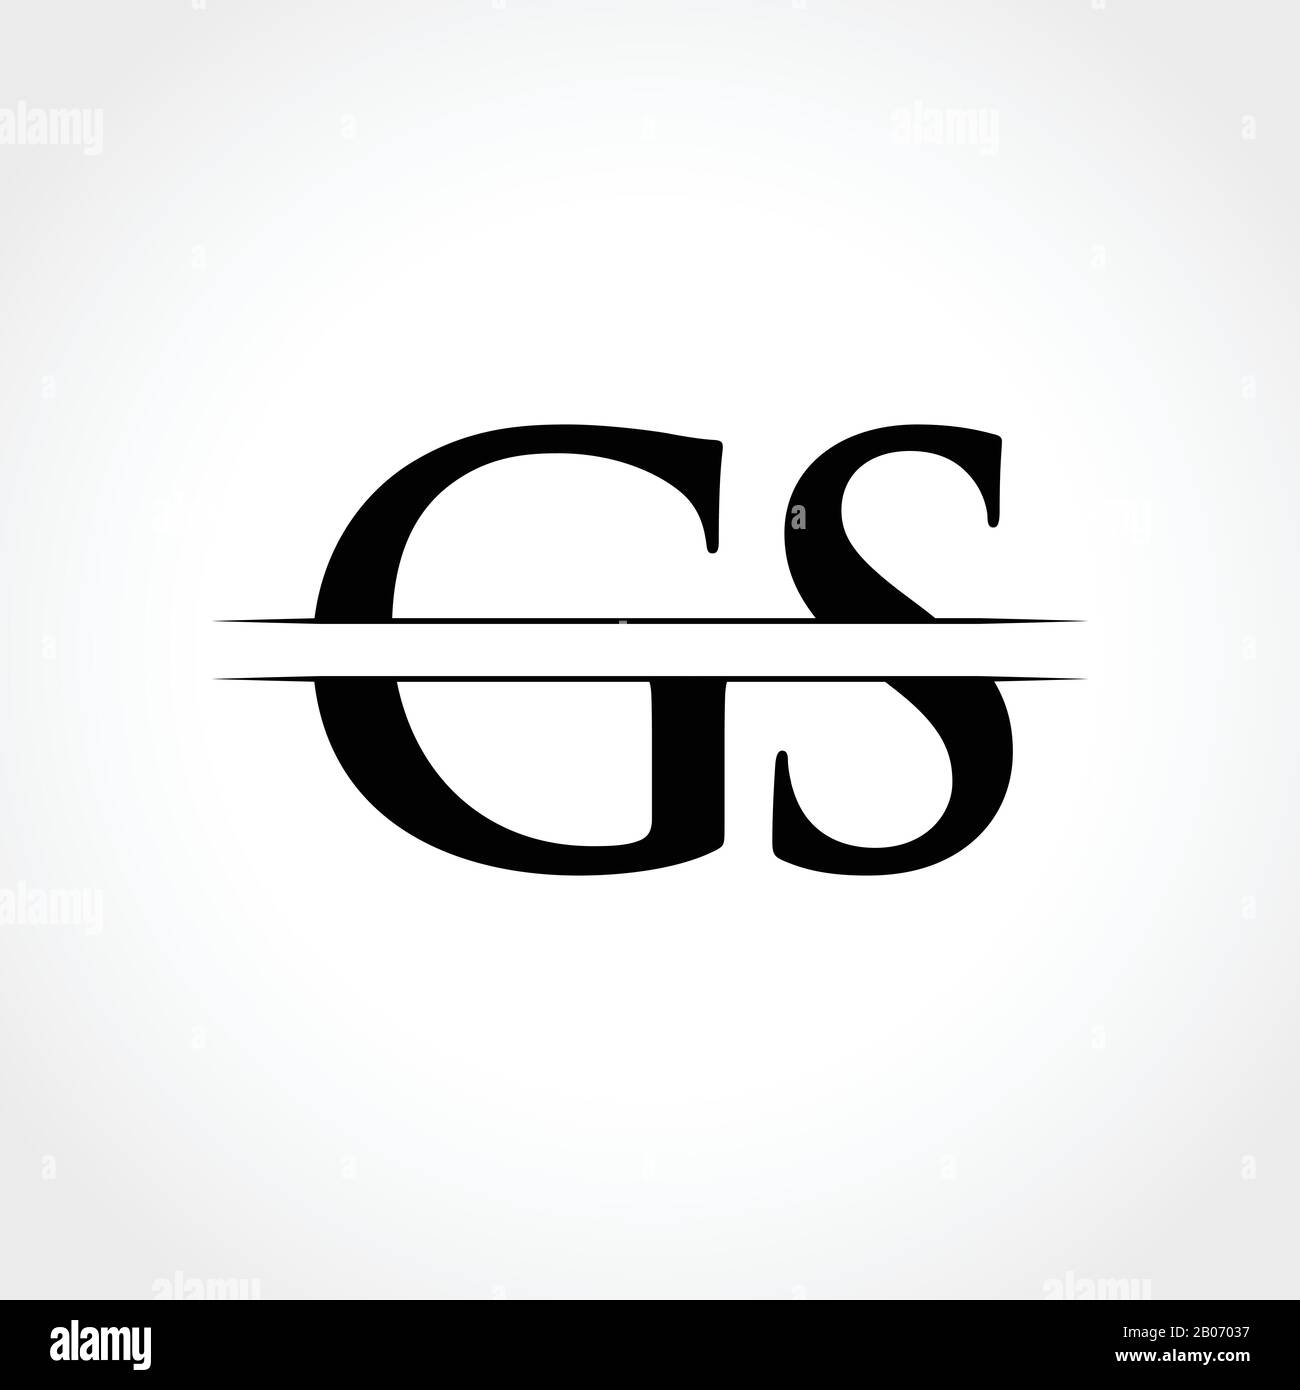 GS letter Type Logo Design vector Template. Abstract Letter GS logo Design Stock Vector